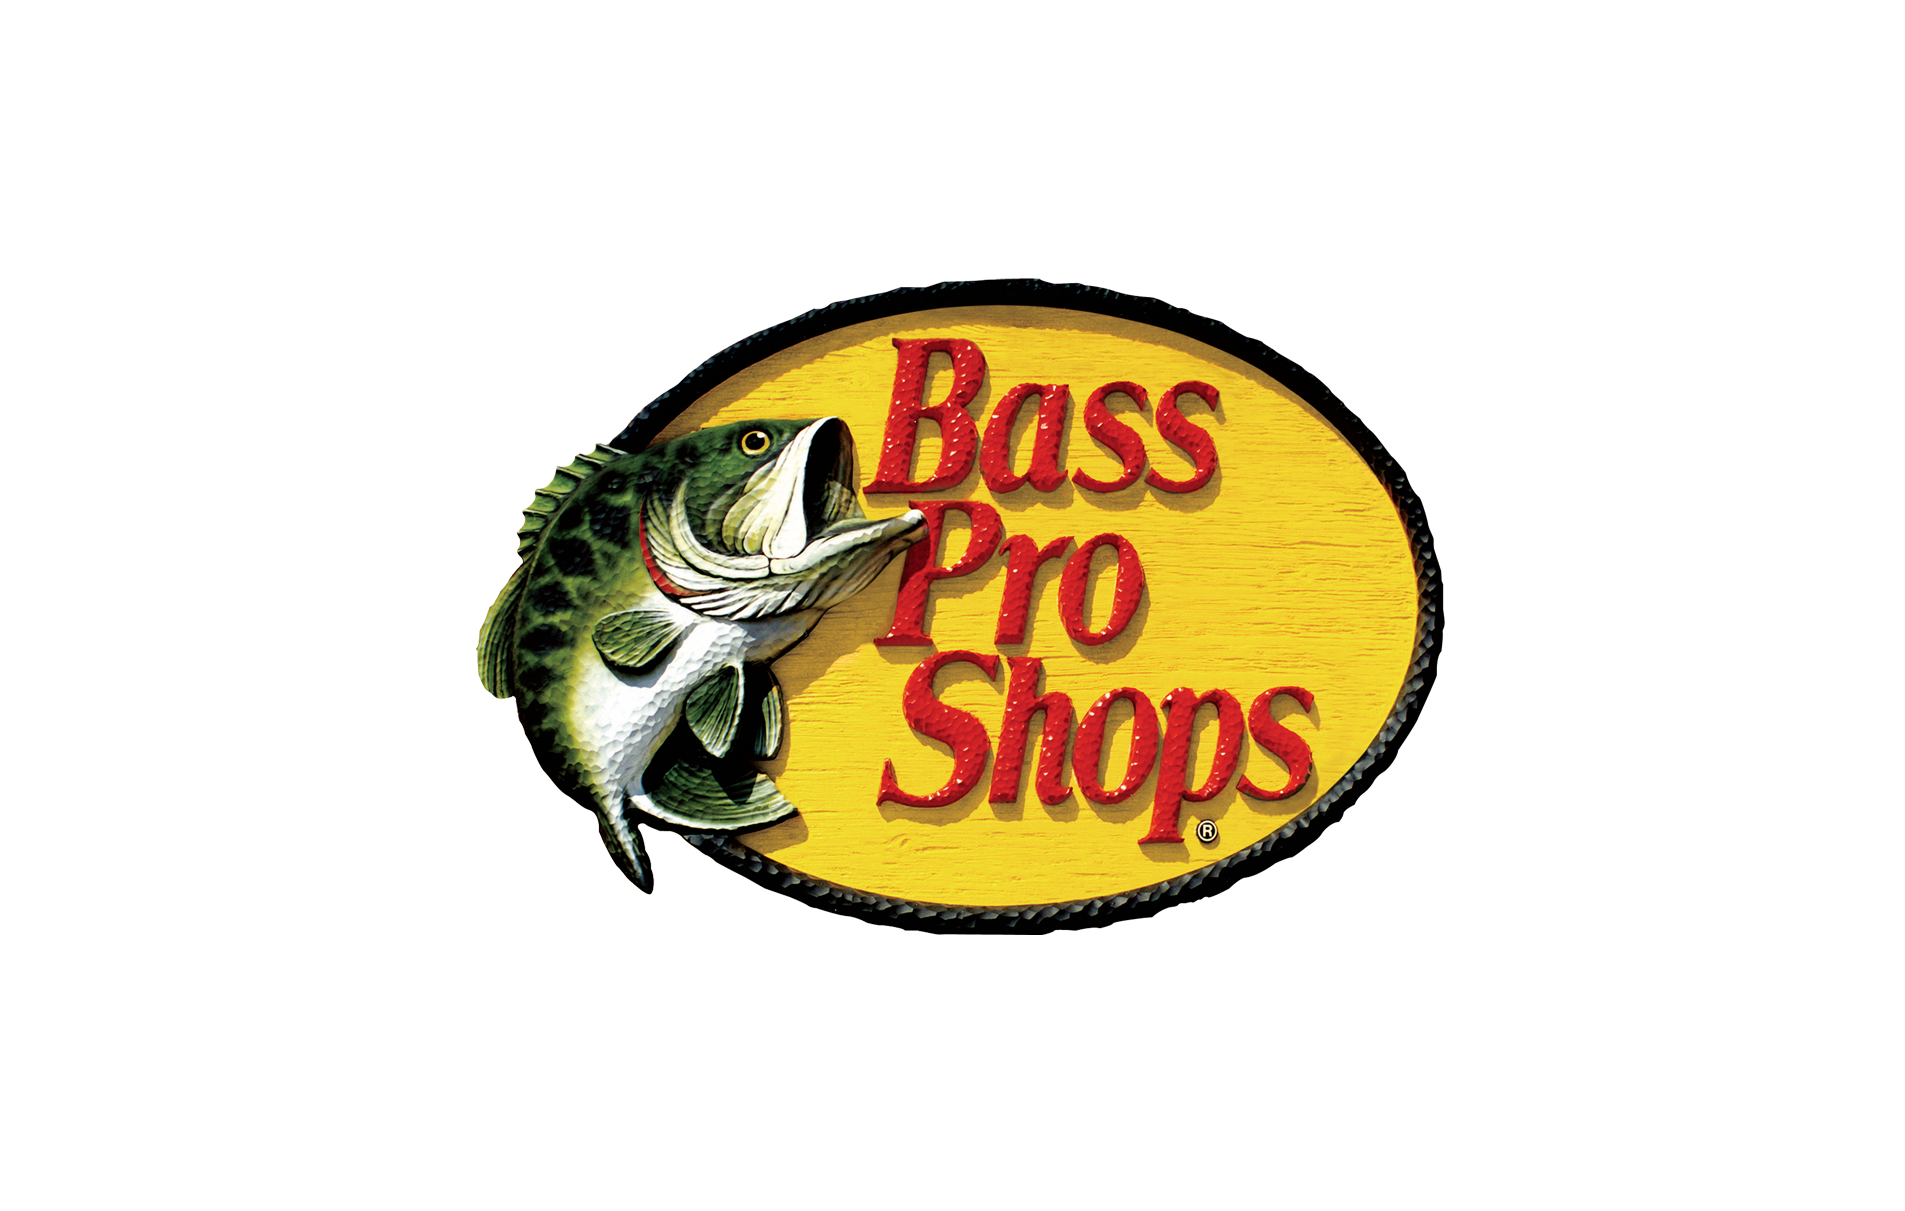 Сказки басс. Bass Pro shops logo. Басс лого. Basso логотип. Bass Pro shops inside.